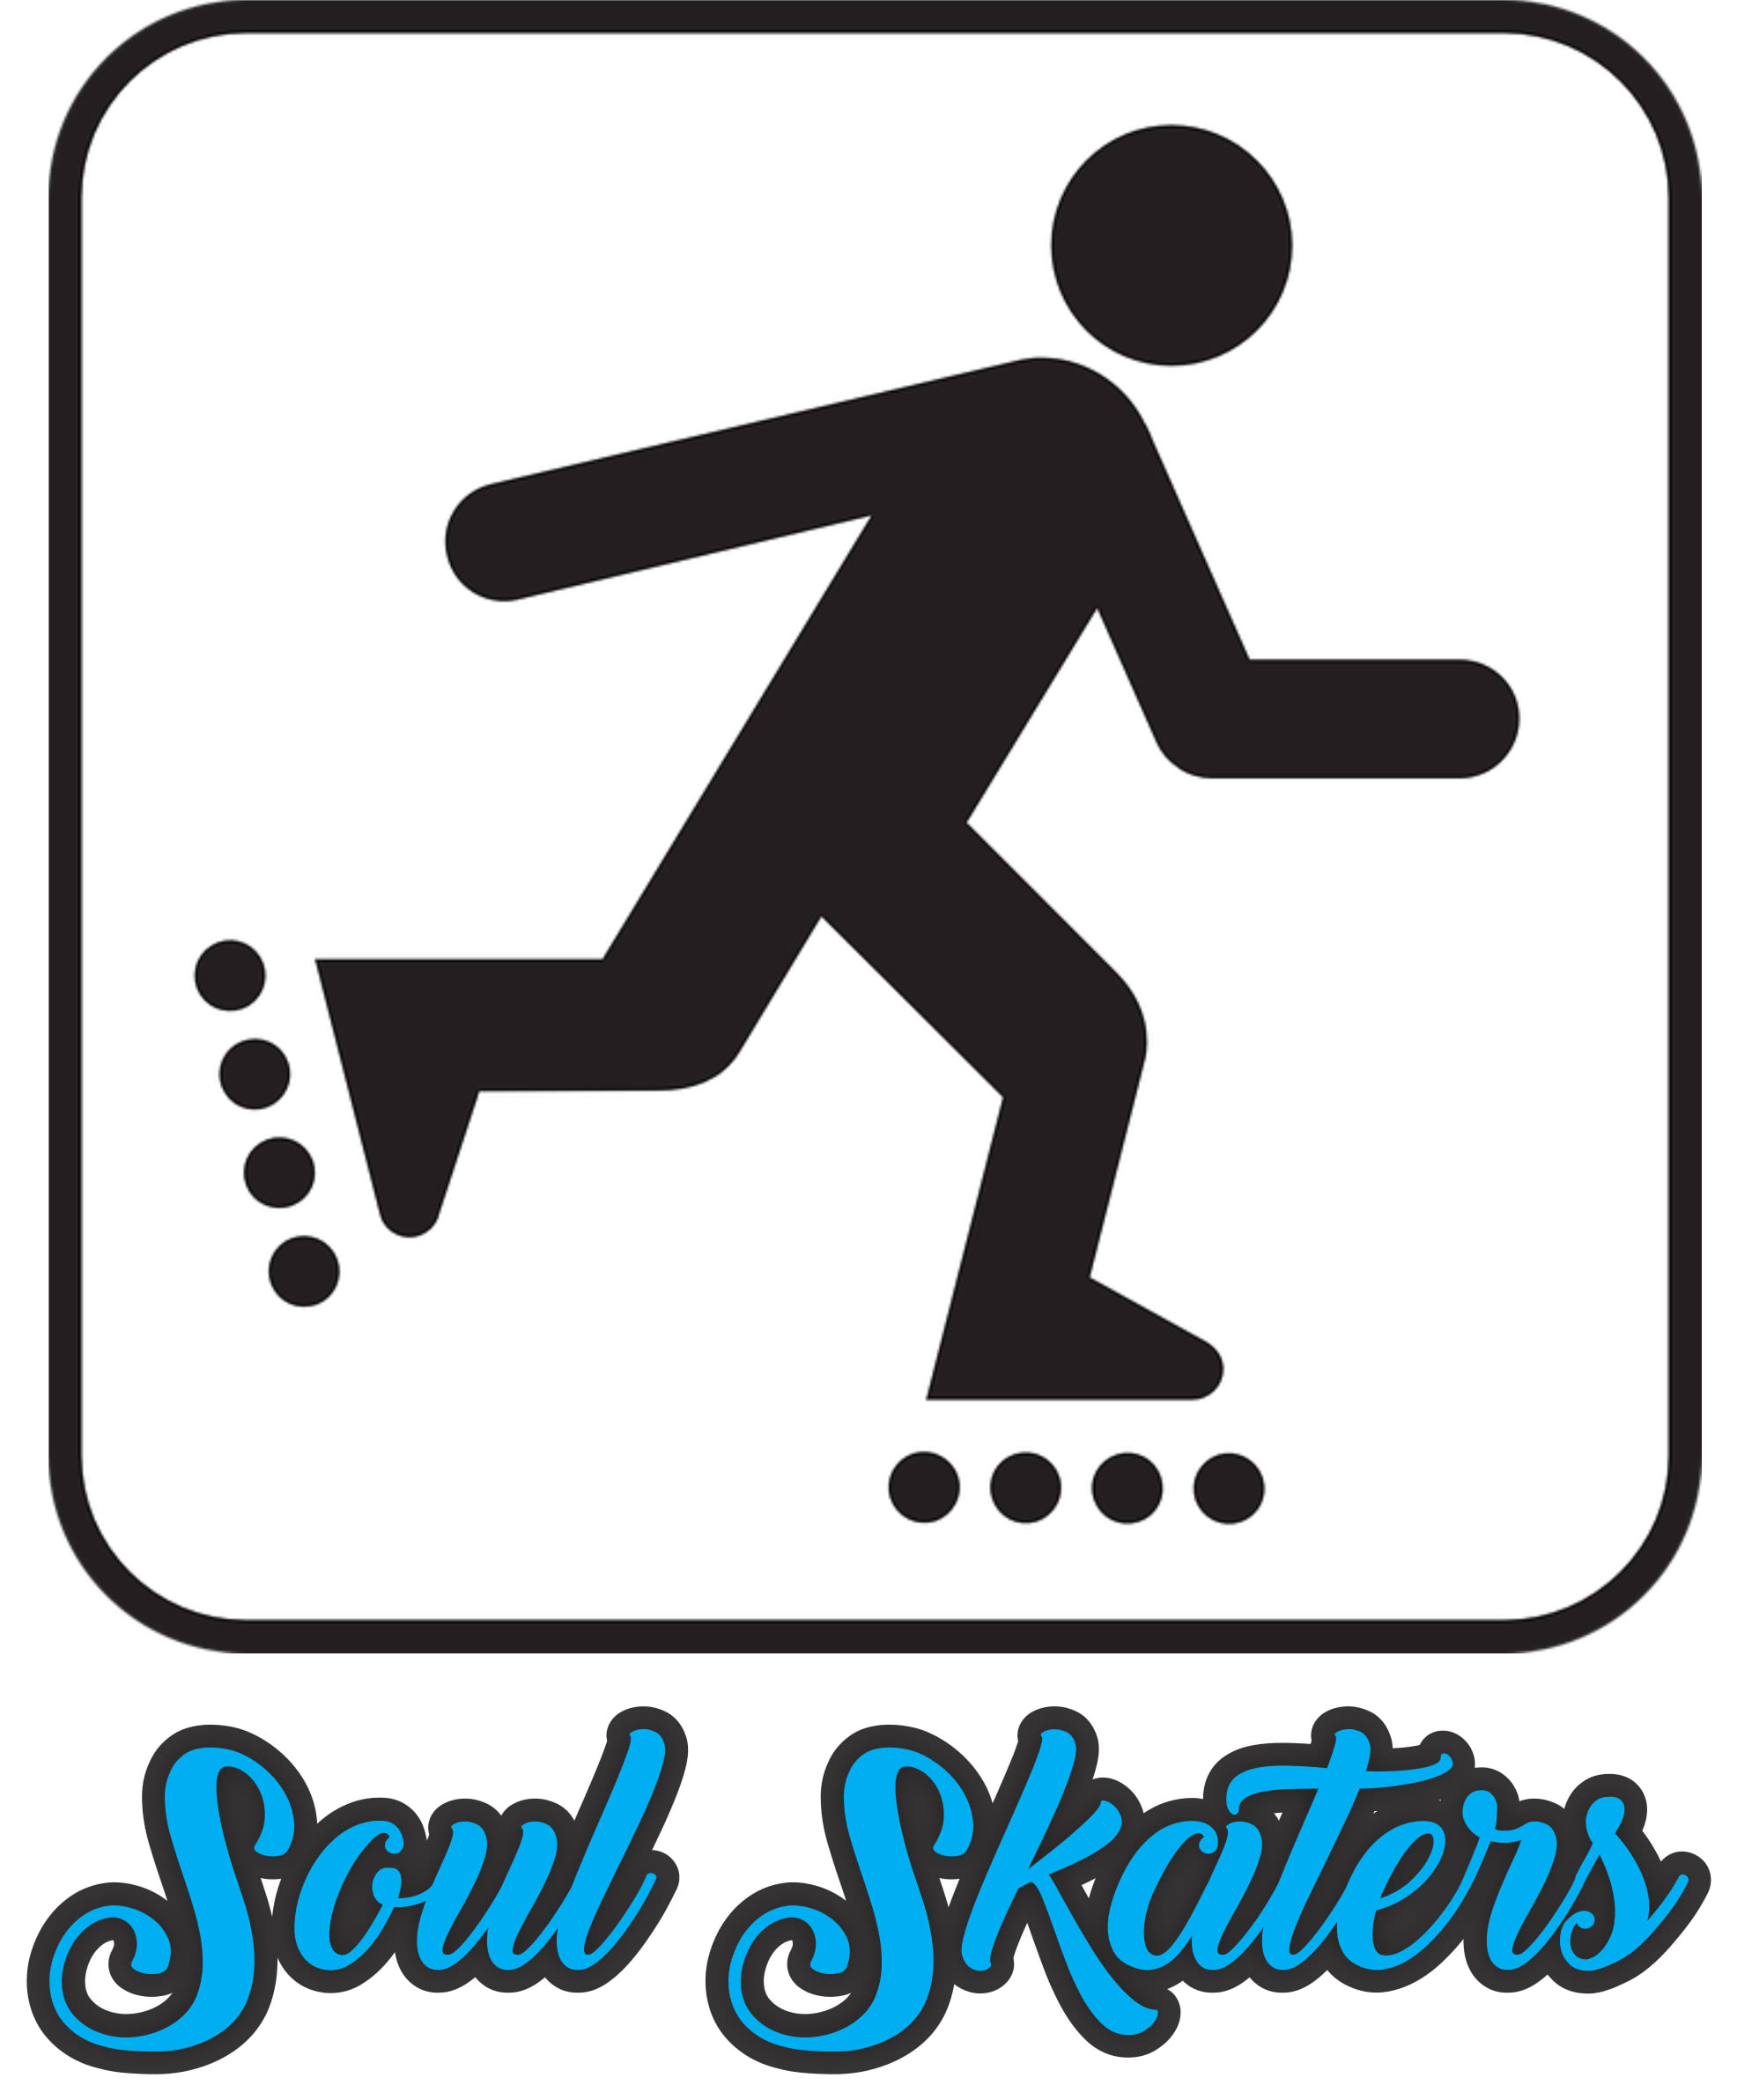 Soul Skaters